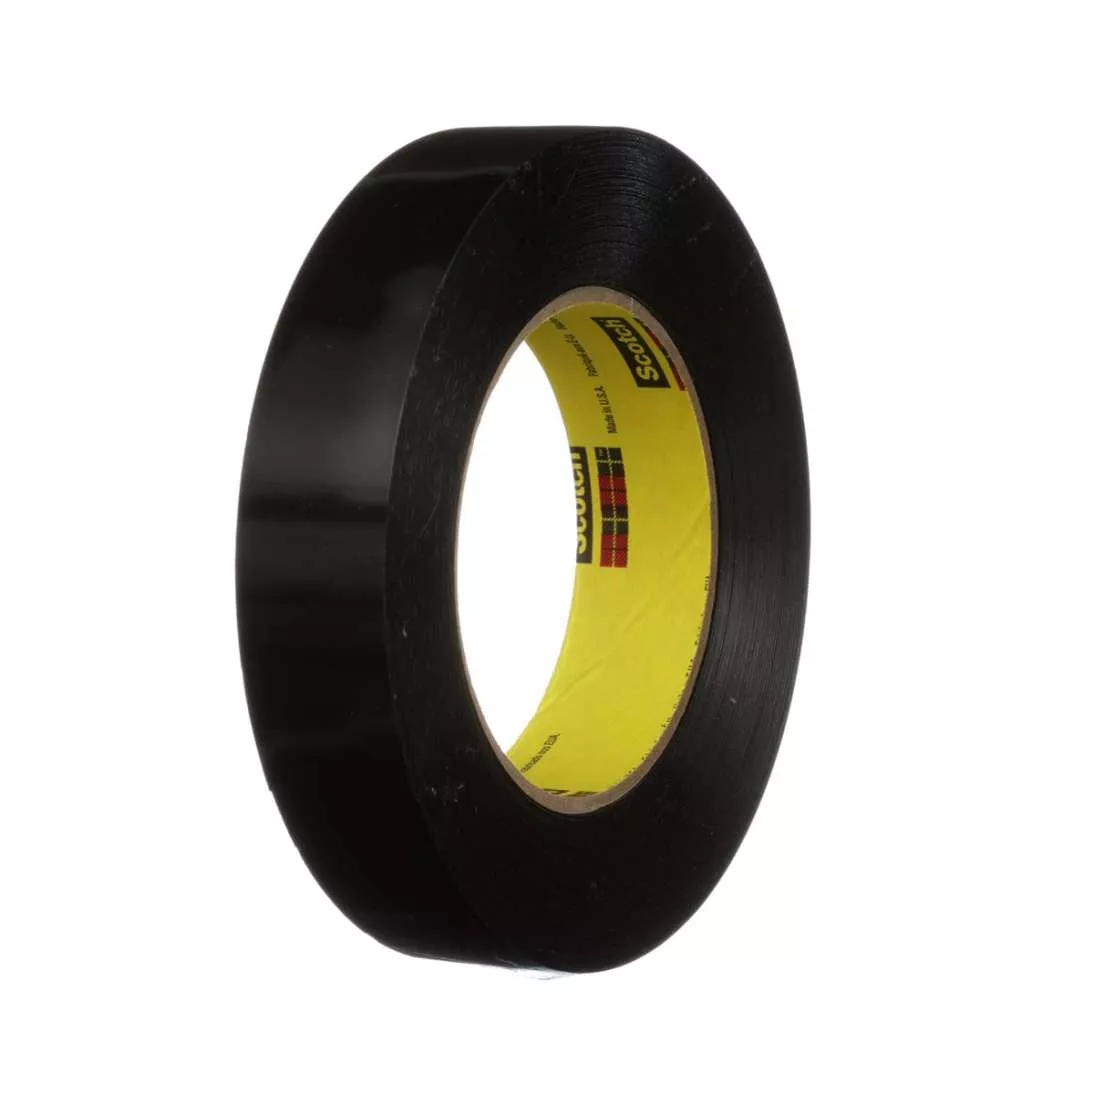 3M™ Preservation Sealing Tape 481, Black, 1/2 in x 36 yd, 9.5 mil, 72
rolls per case